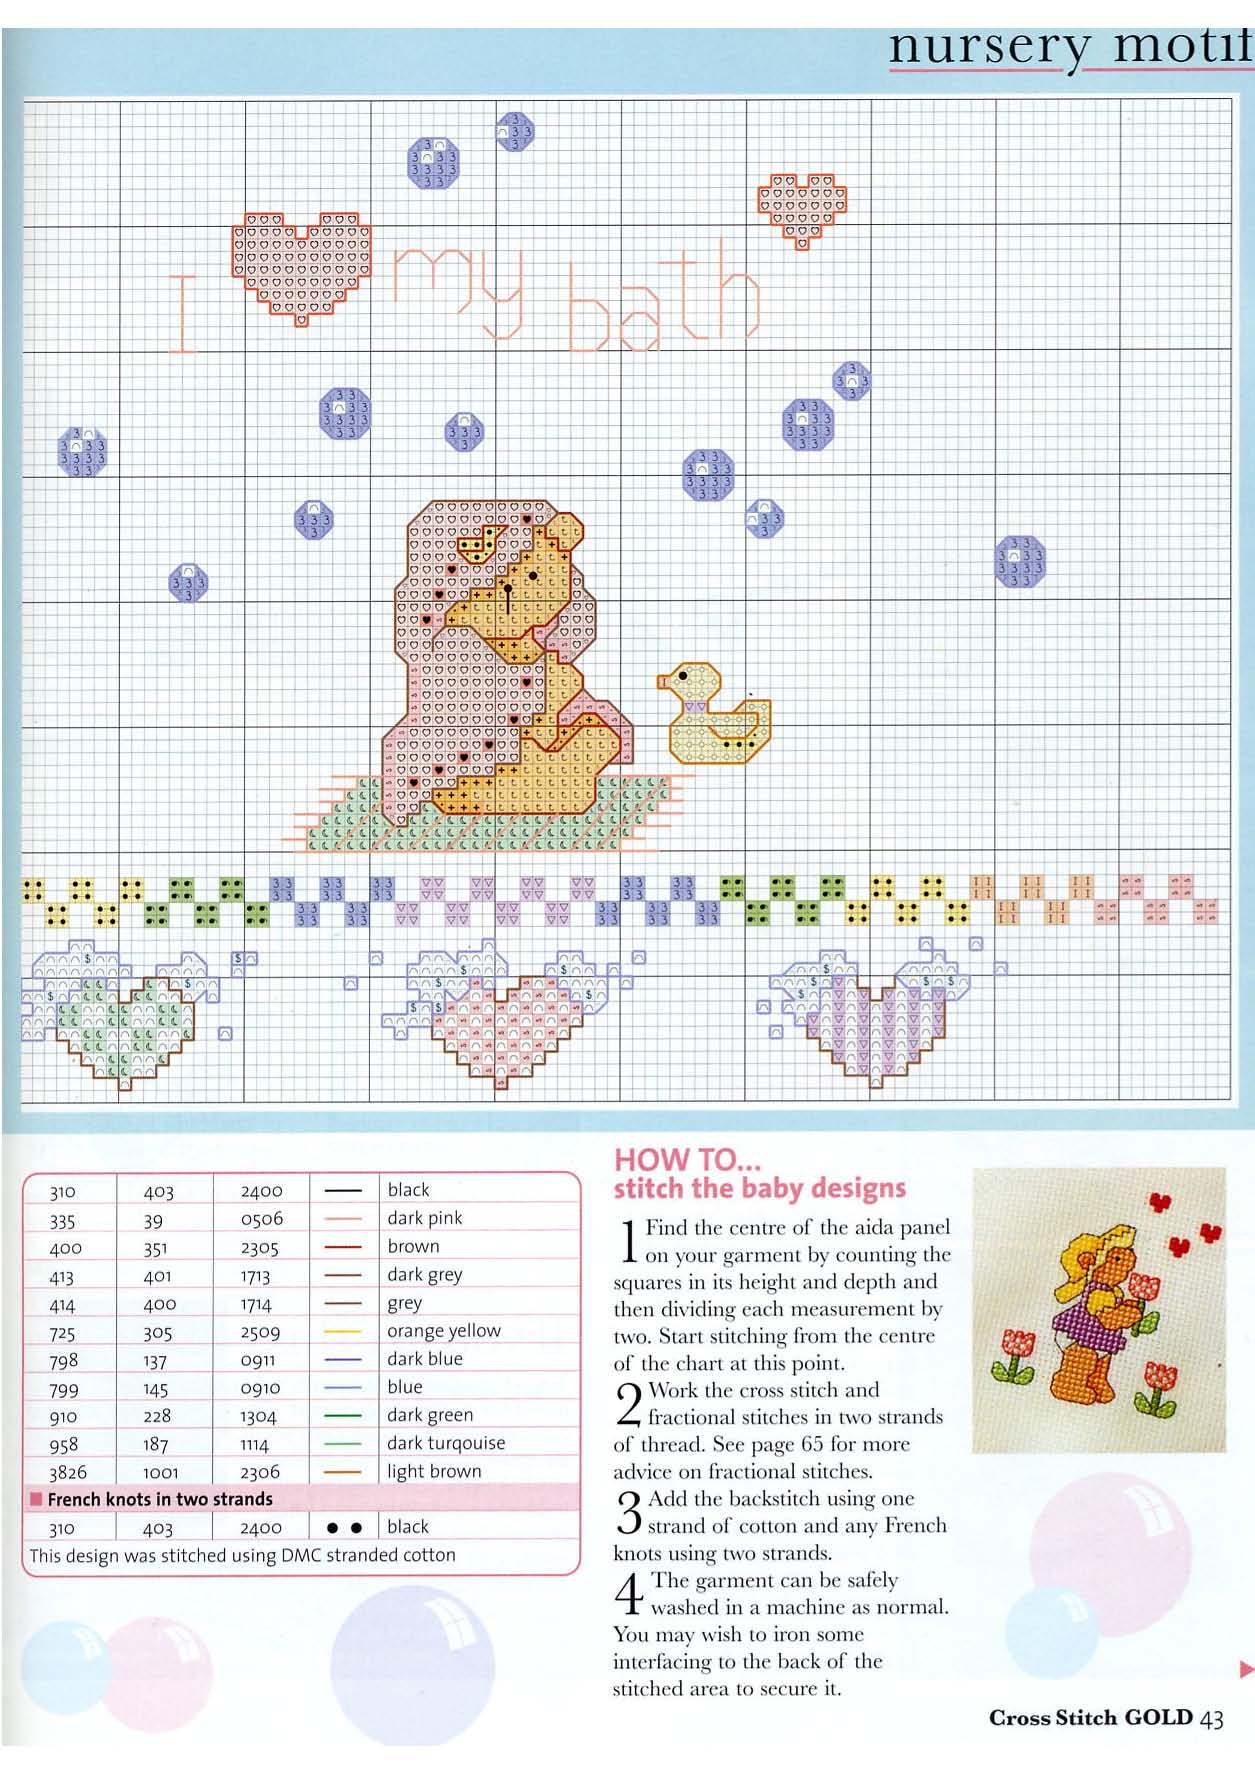 Cross stitch patterns with teddy bears for nursery set (3)